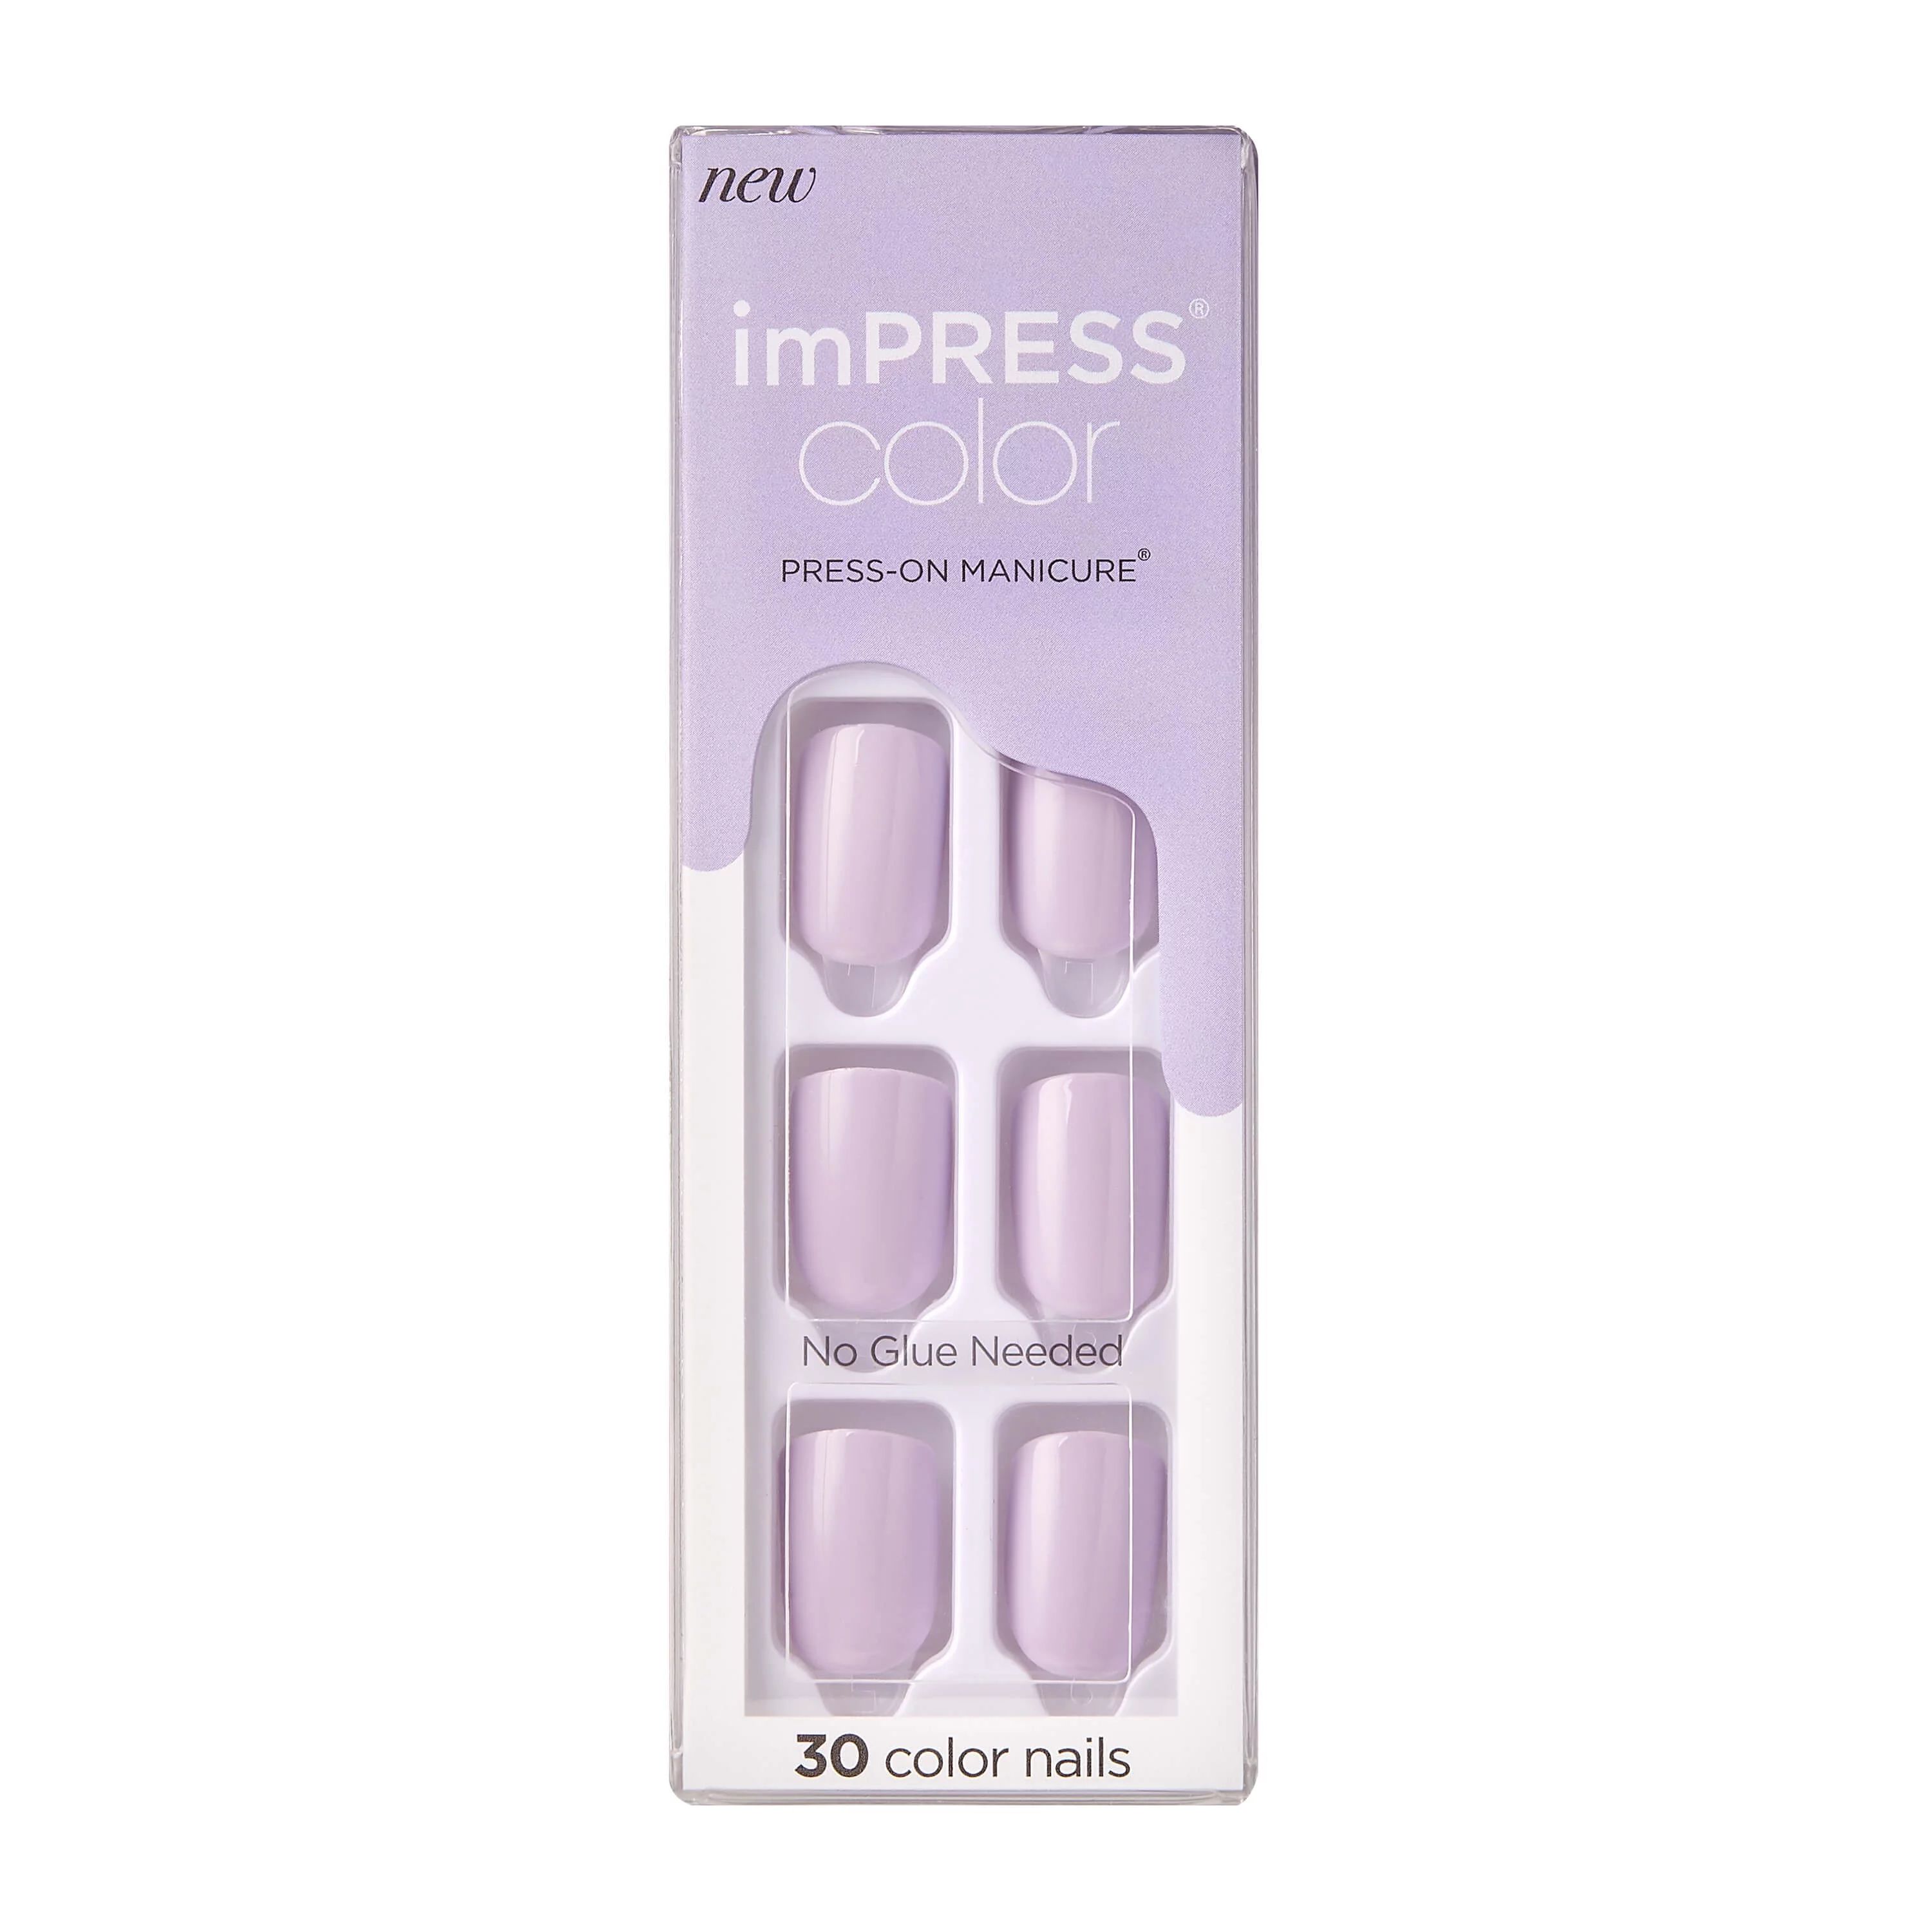 imPRESS Color Press-on Manicure, Picture Purplect, Short | Walmart (US)